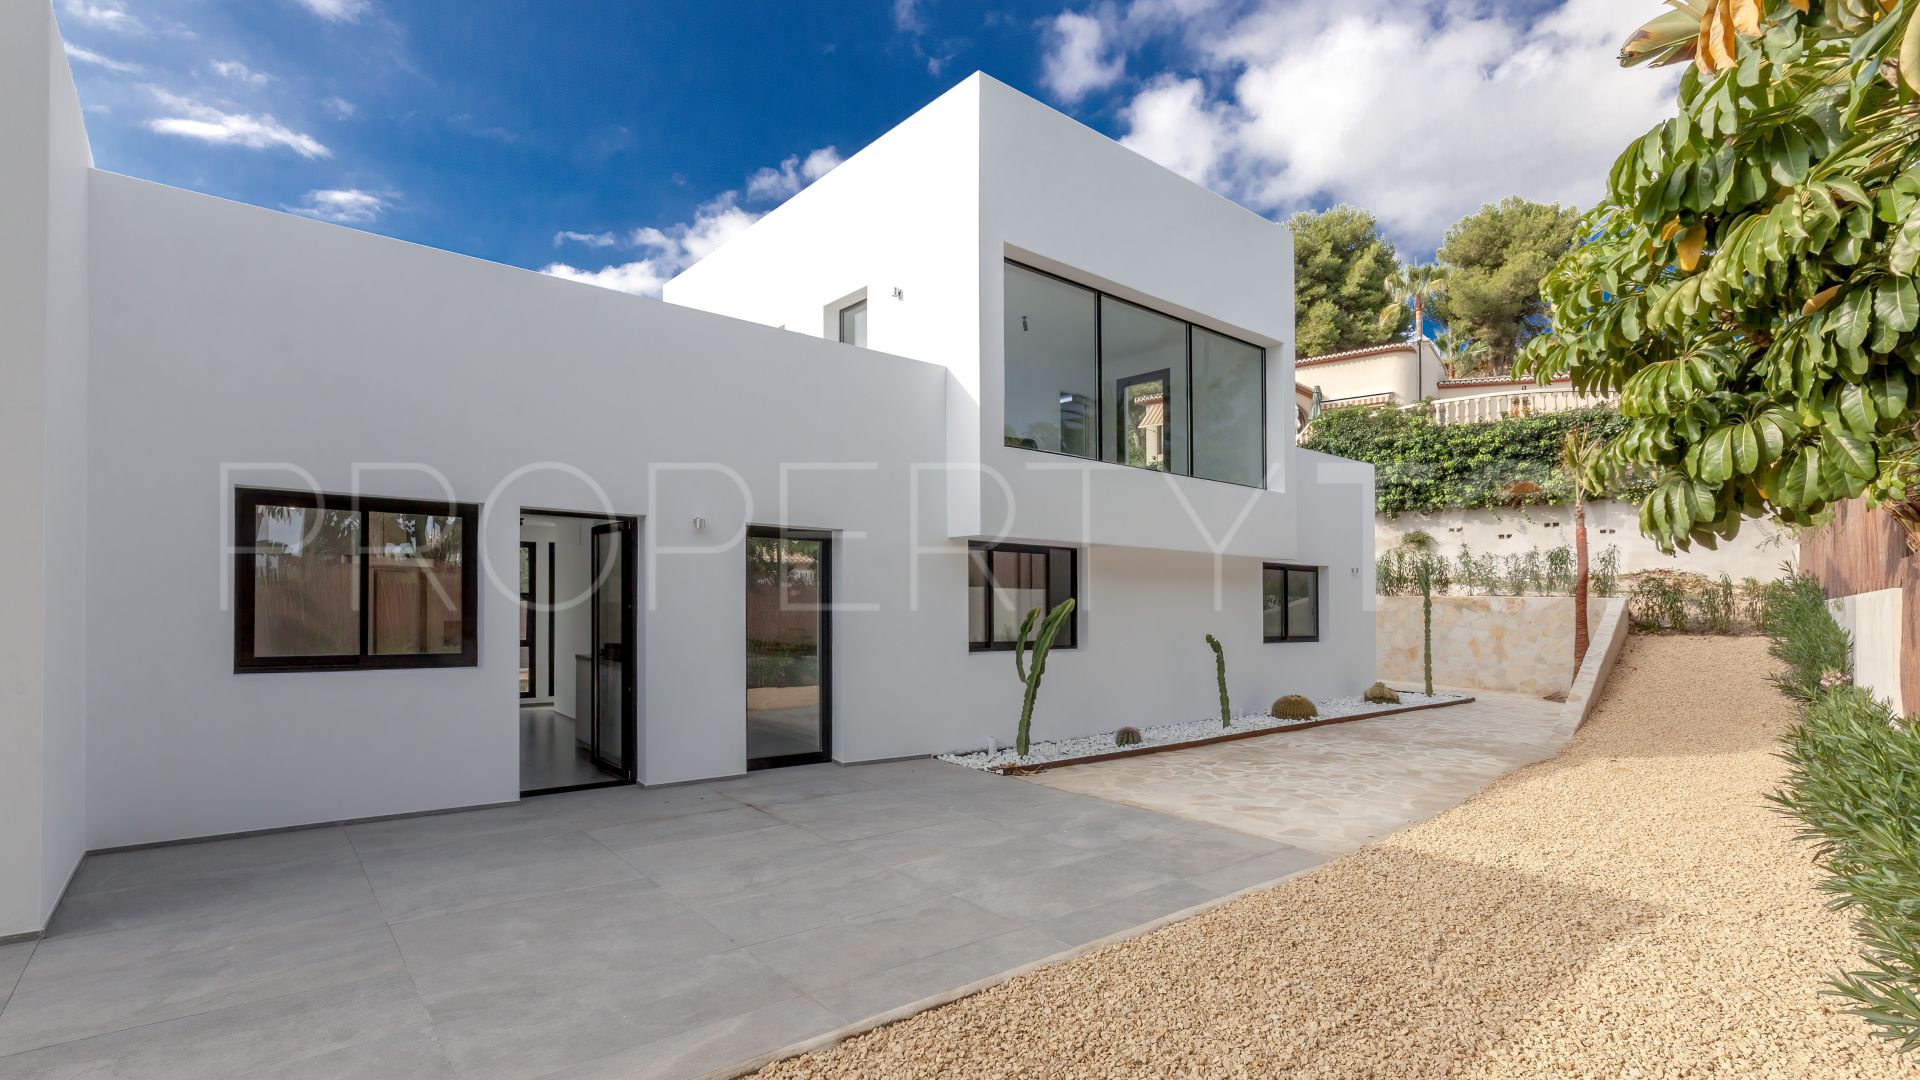 For sale villa in Cap Marti with 3 bedrooms